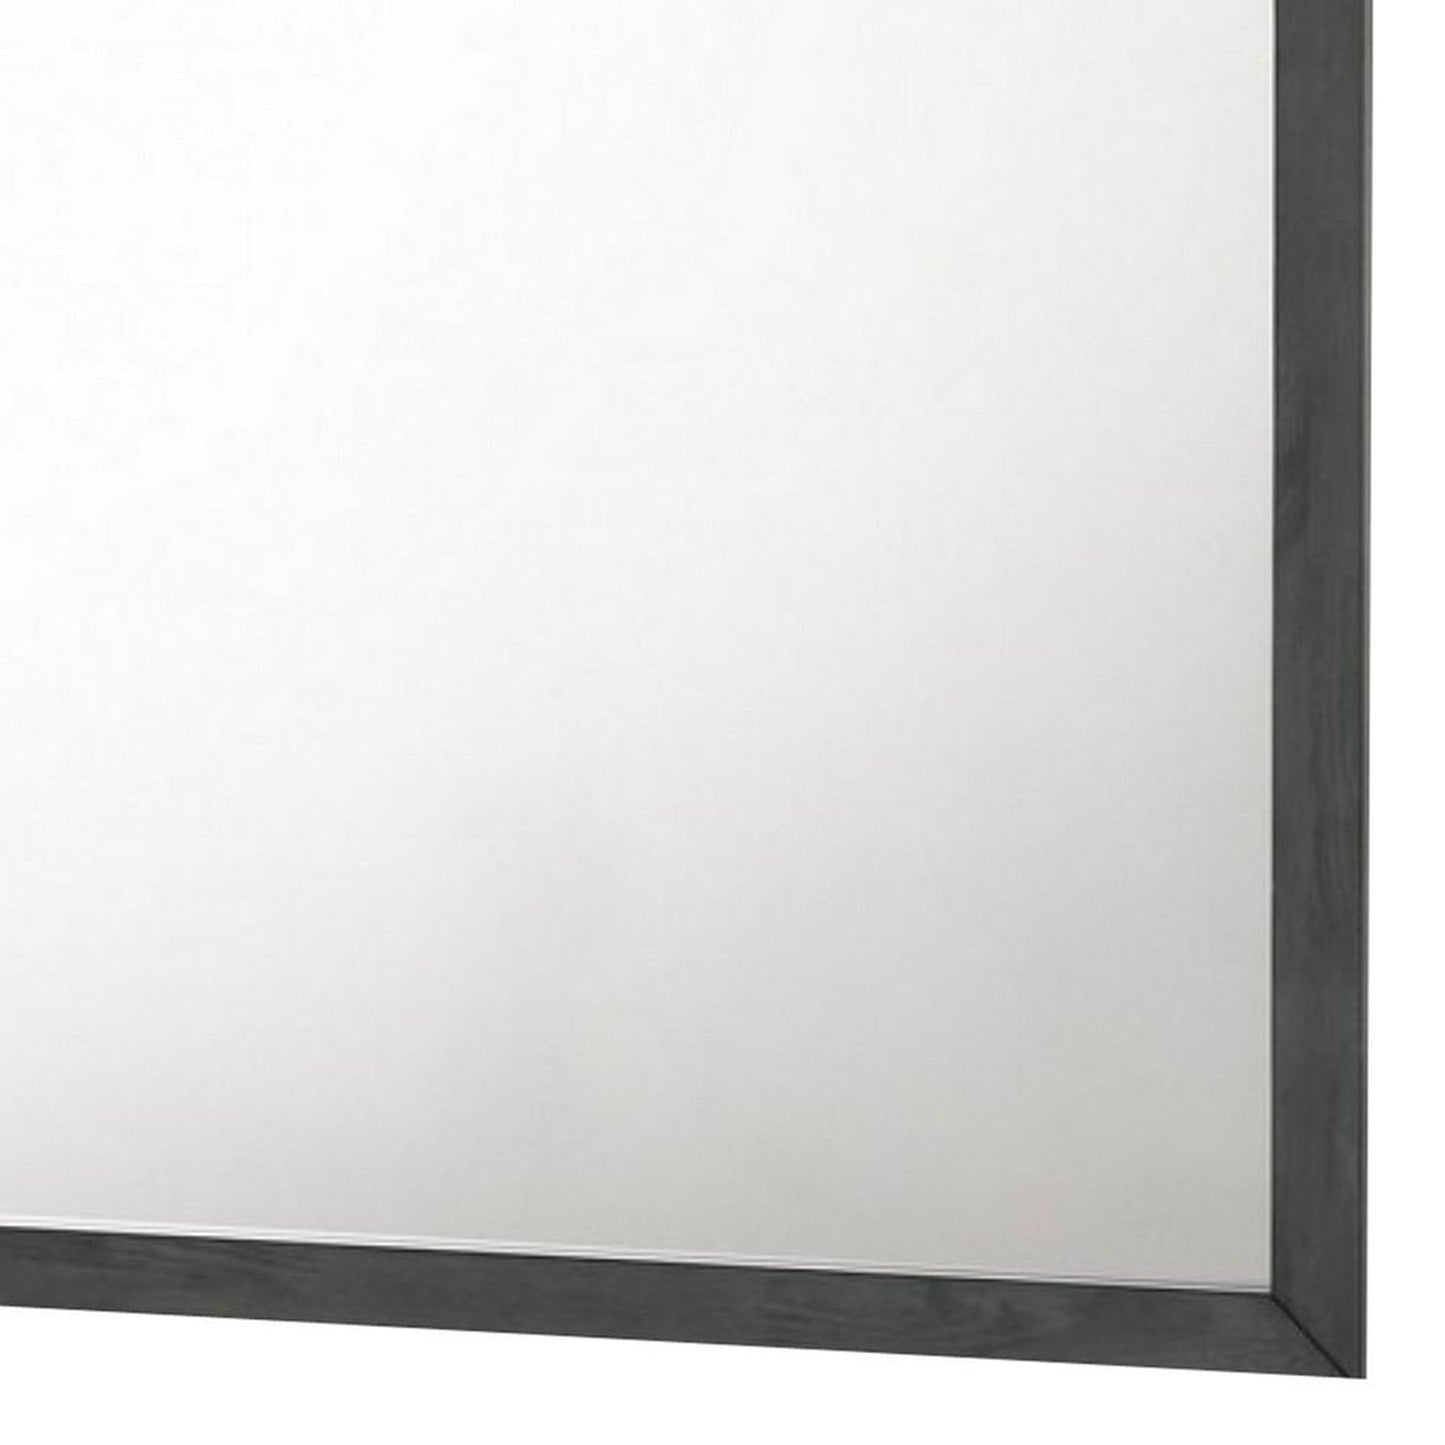 Benzara 40" Rectangular Gray Wooden Framed Wall Mirror With Natural Wood Grain Details